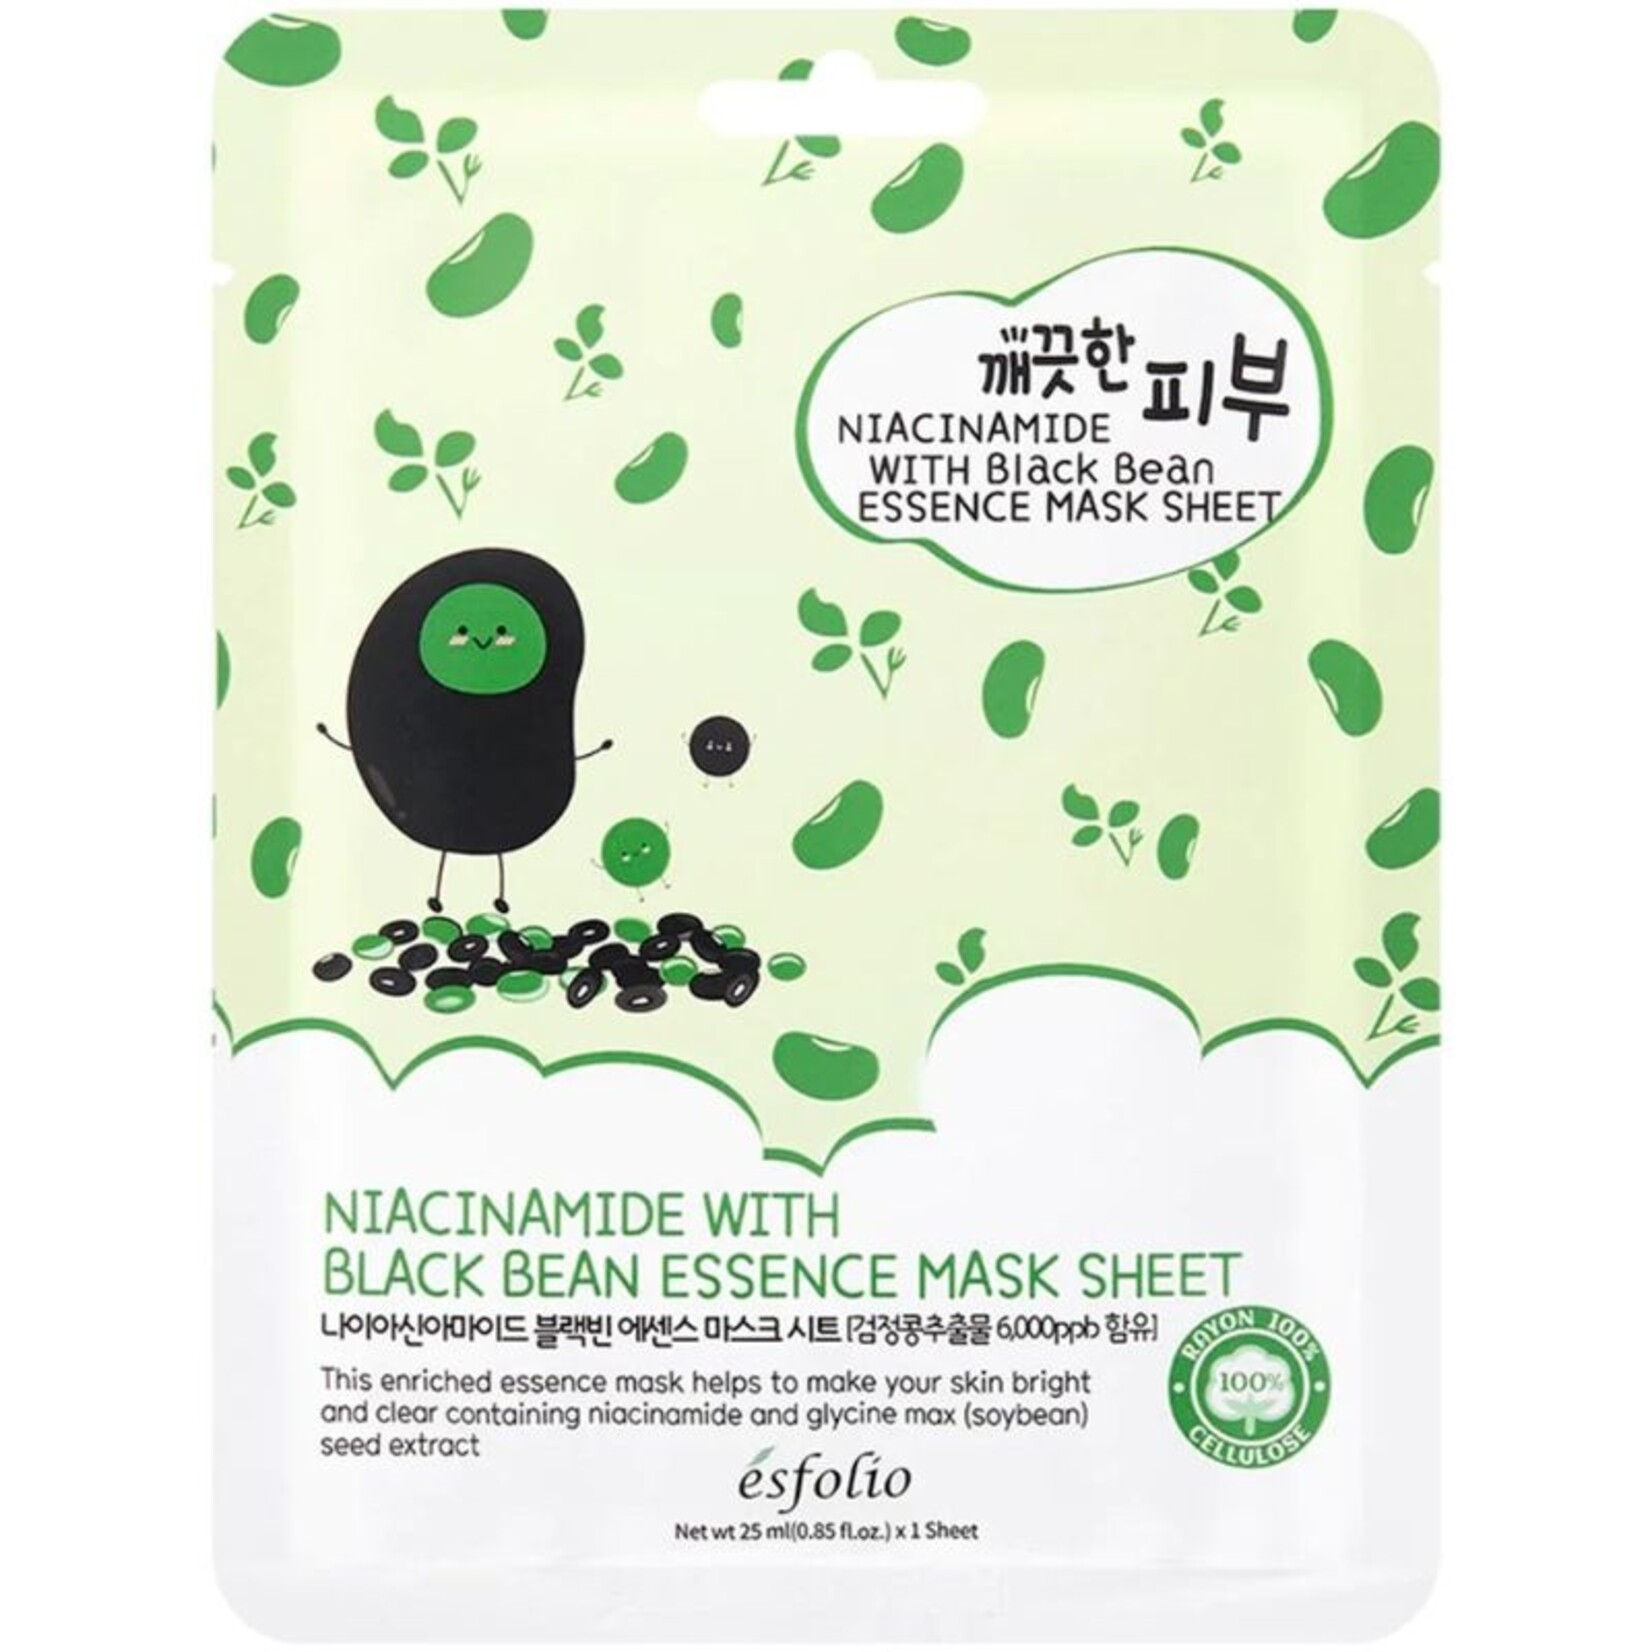 esfolio Pure Skin Niacinamide Black Bean Essence Mask Sheet